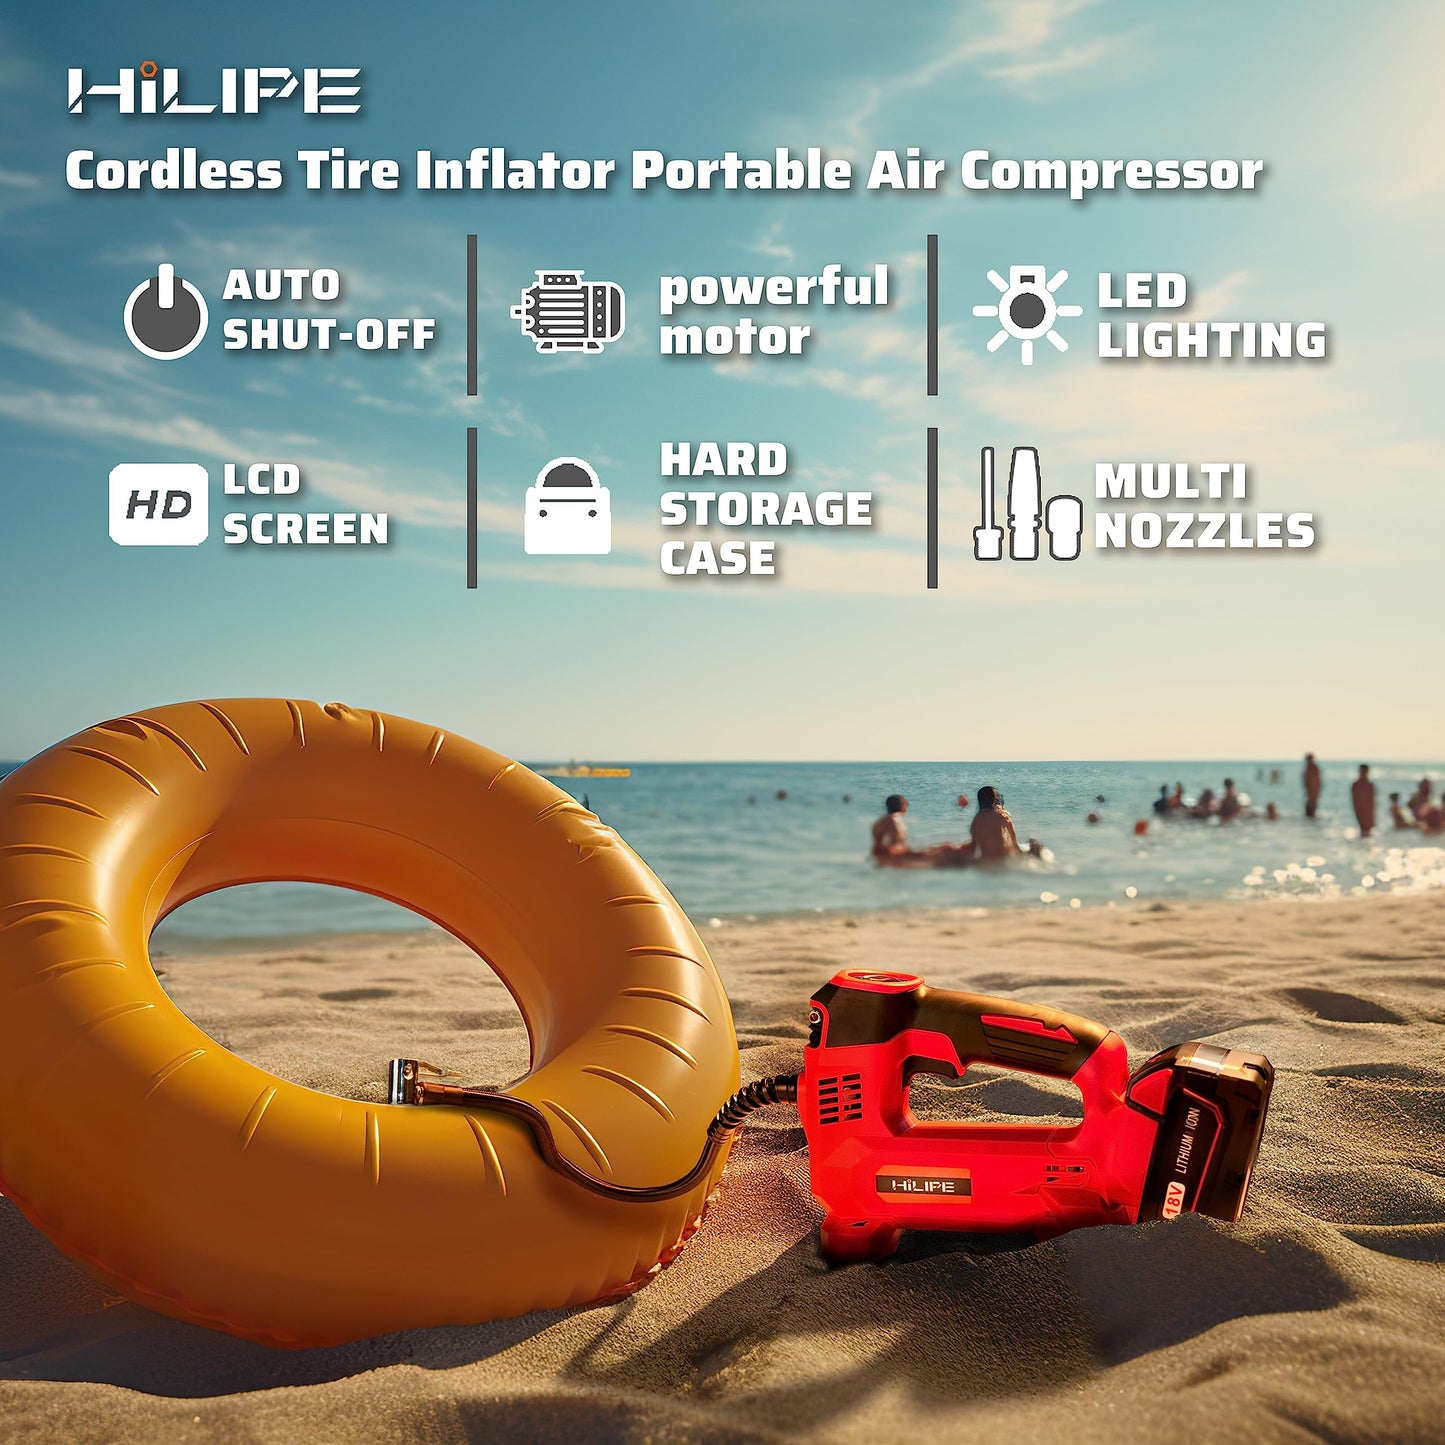 Cordless Tire Inflator Portable Air Compressor